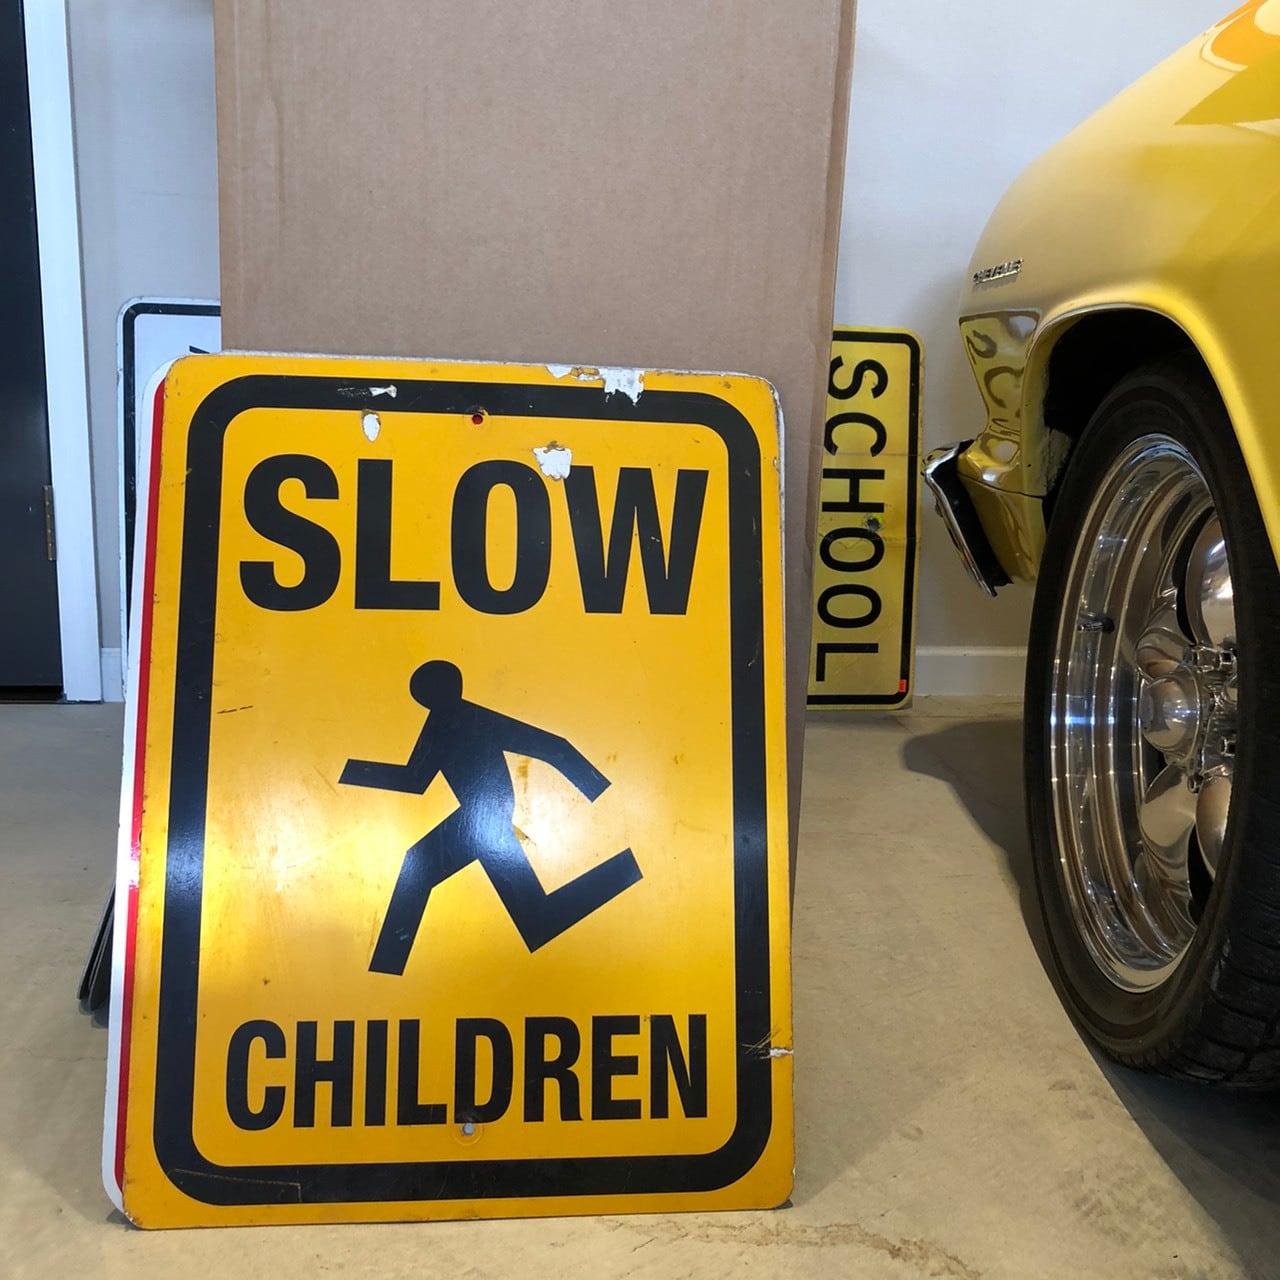 Slow children 1　アメリカンロードサイン　トラフィックサイン　道路標識 | Y&market powered by BASE